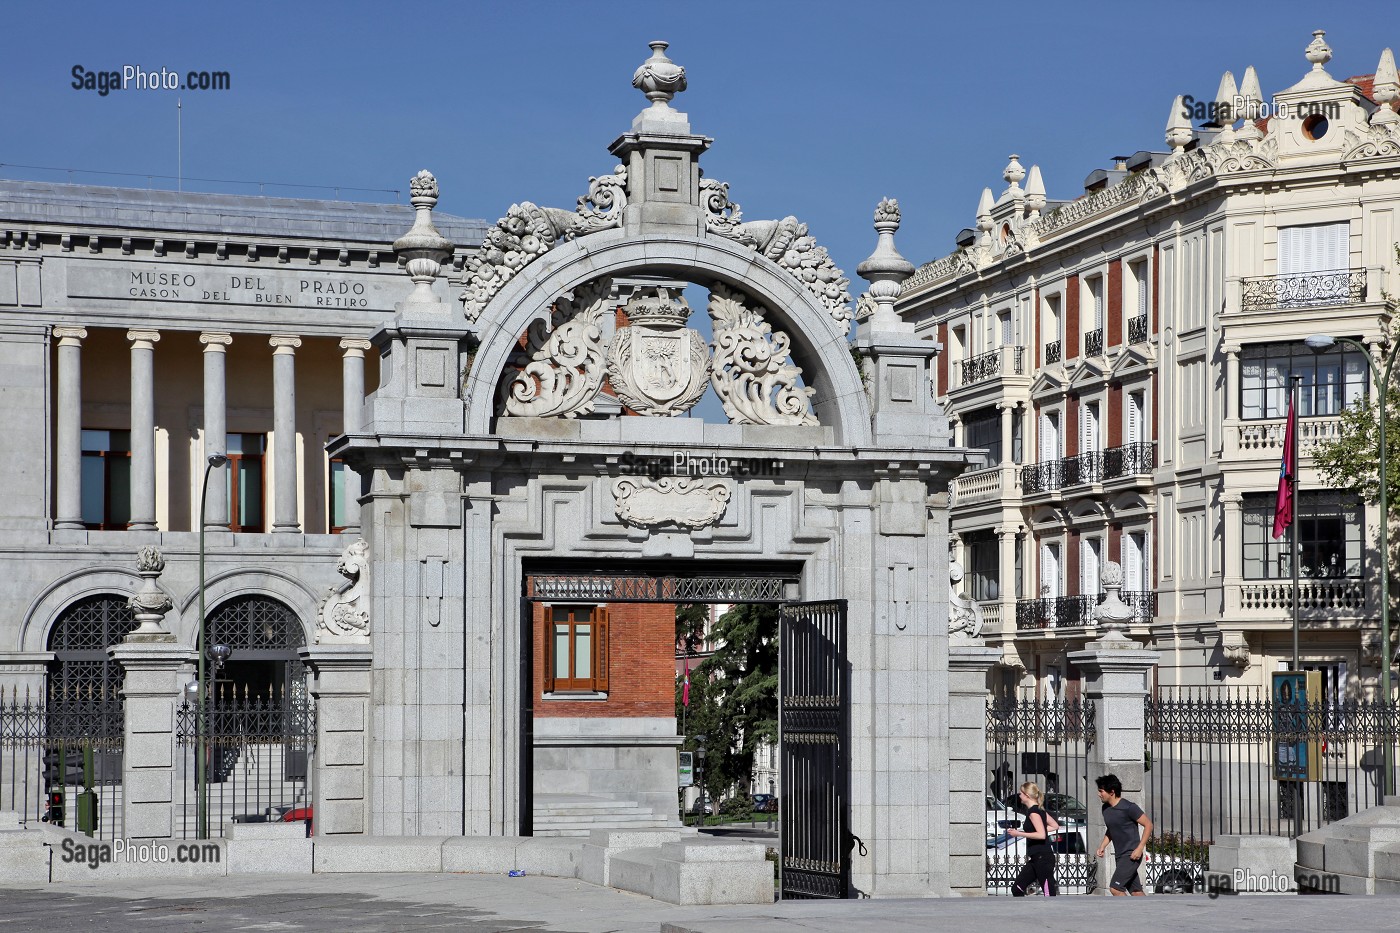 MUSEO DEL PRADO, CASON DEL BUEN RETIRO ET PORTAIL SCULPTE DE L'ENTREE DU PARQUE DEL BUEN RETIRO, MADRID, ESPAGNE 